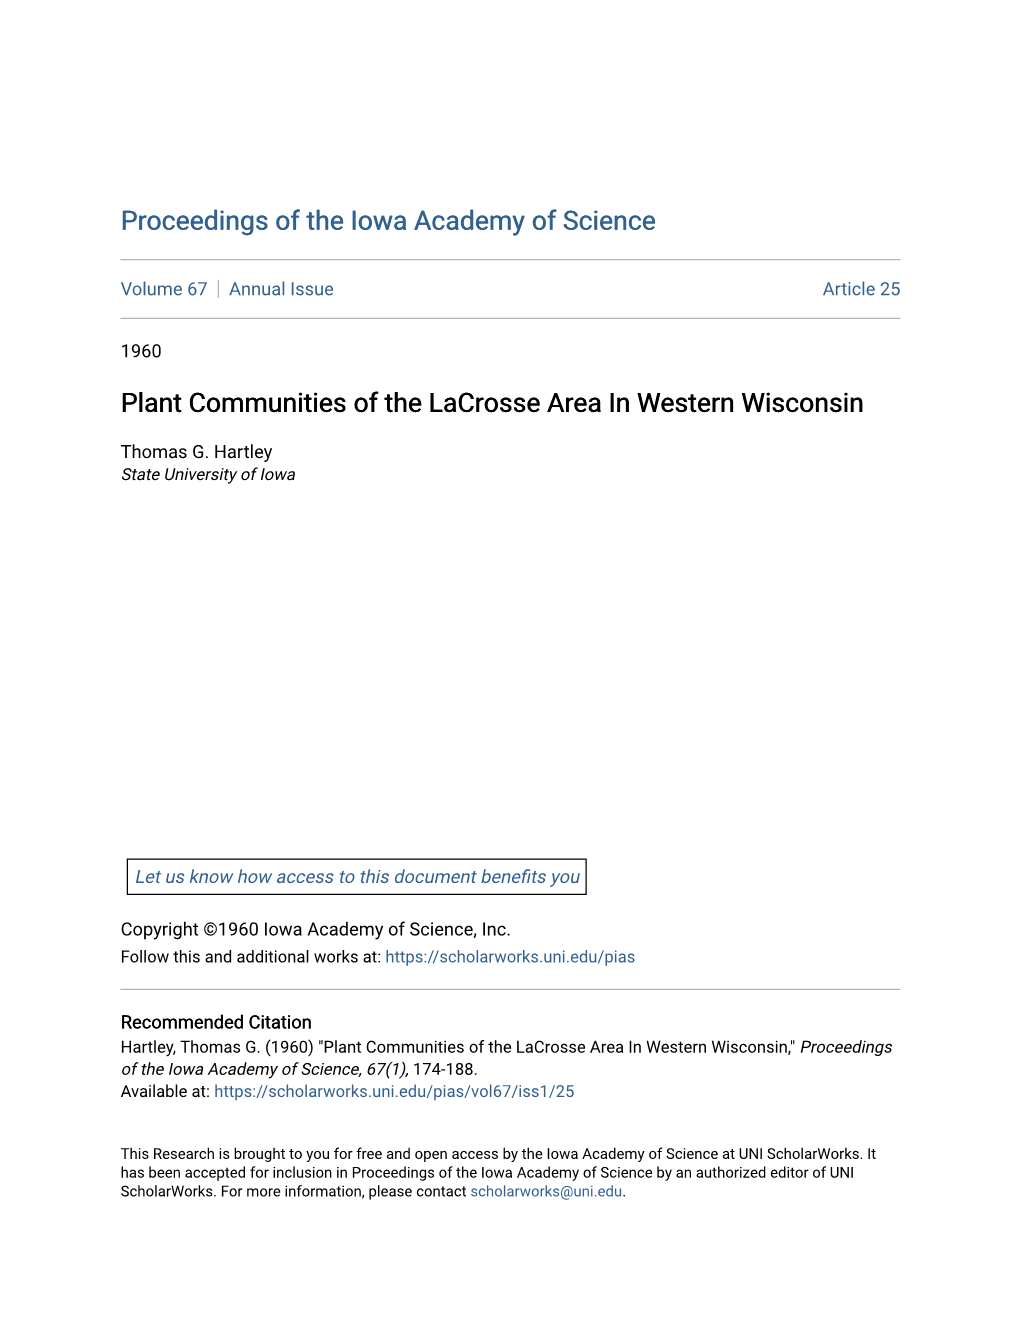 Plant Communities of the Lacrosse Area in Western Wisconsin